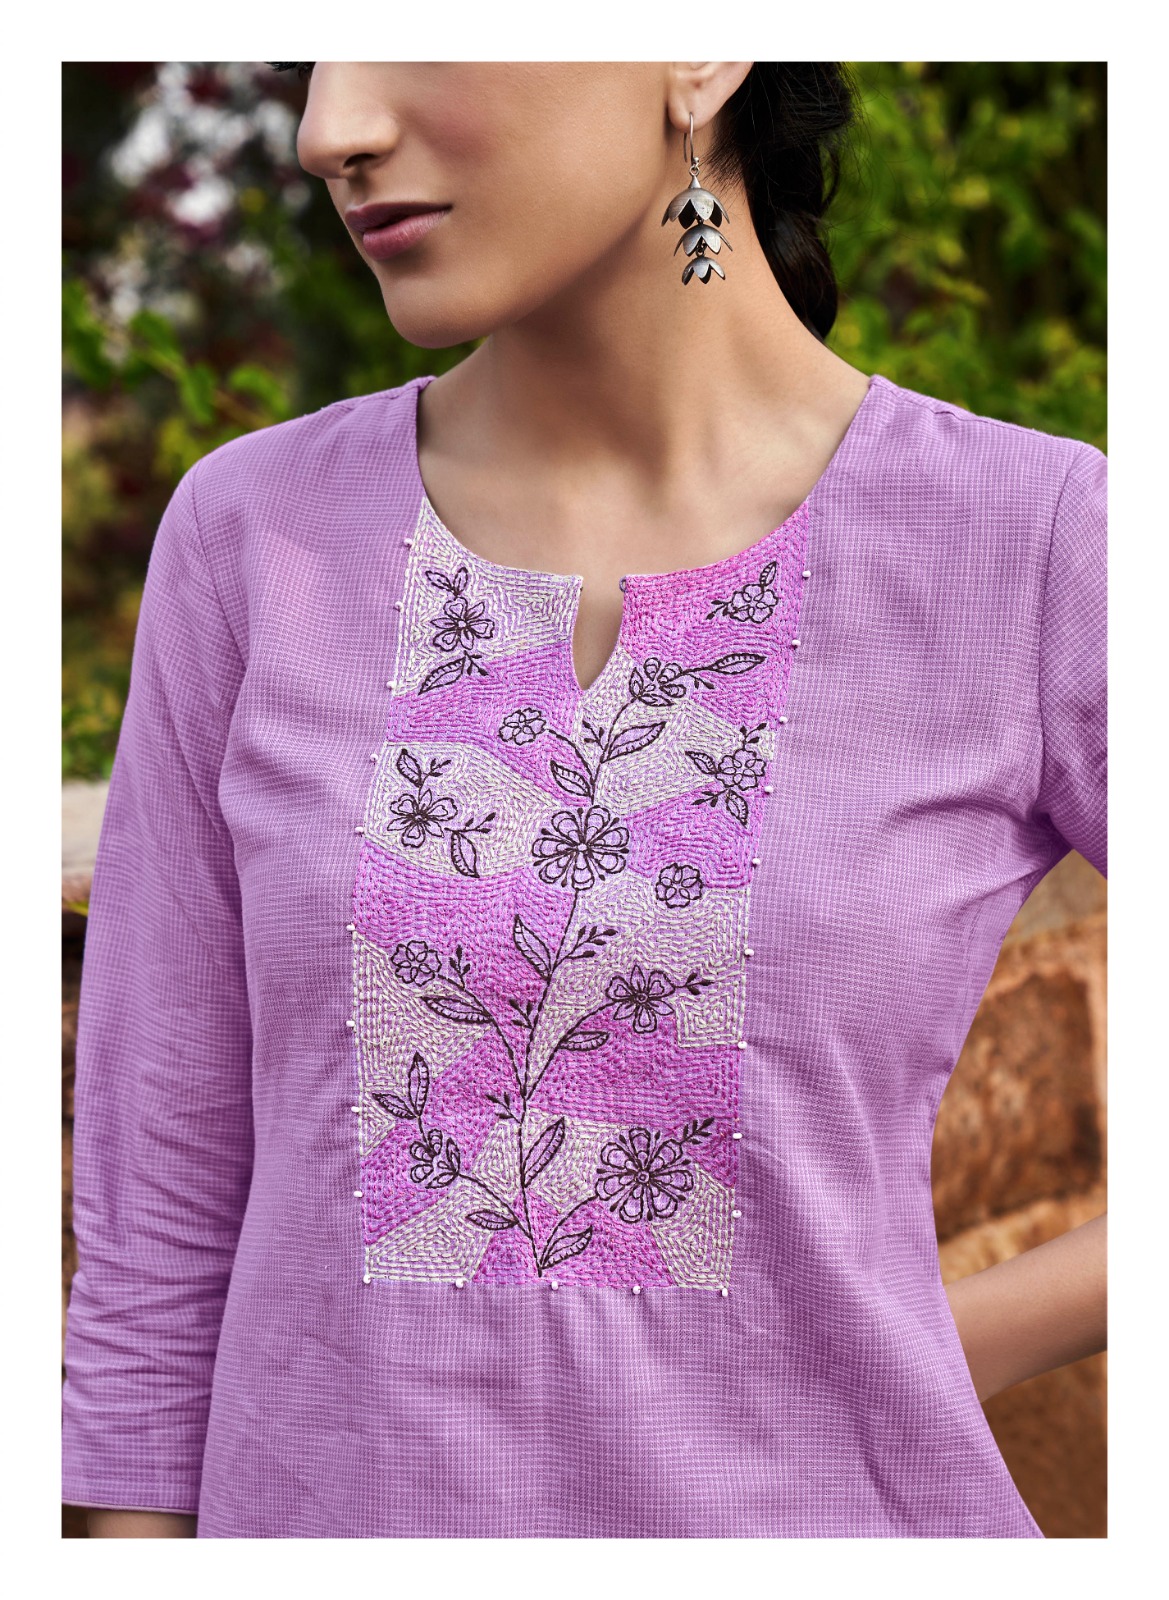 four buttons raina cotton attrective look kurti catalog